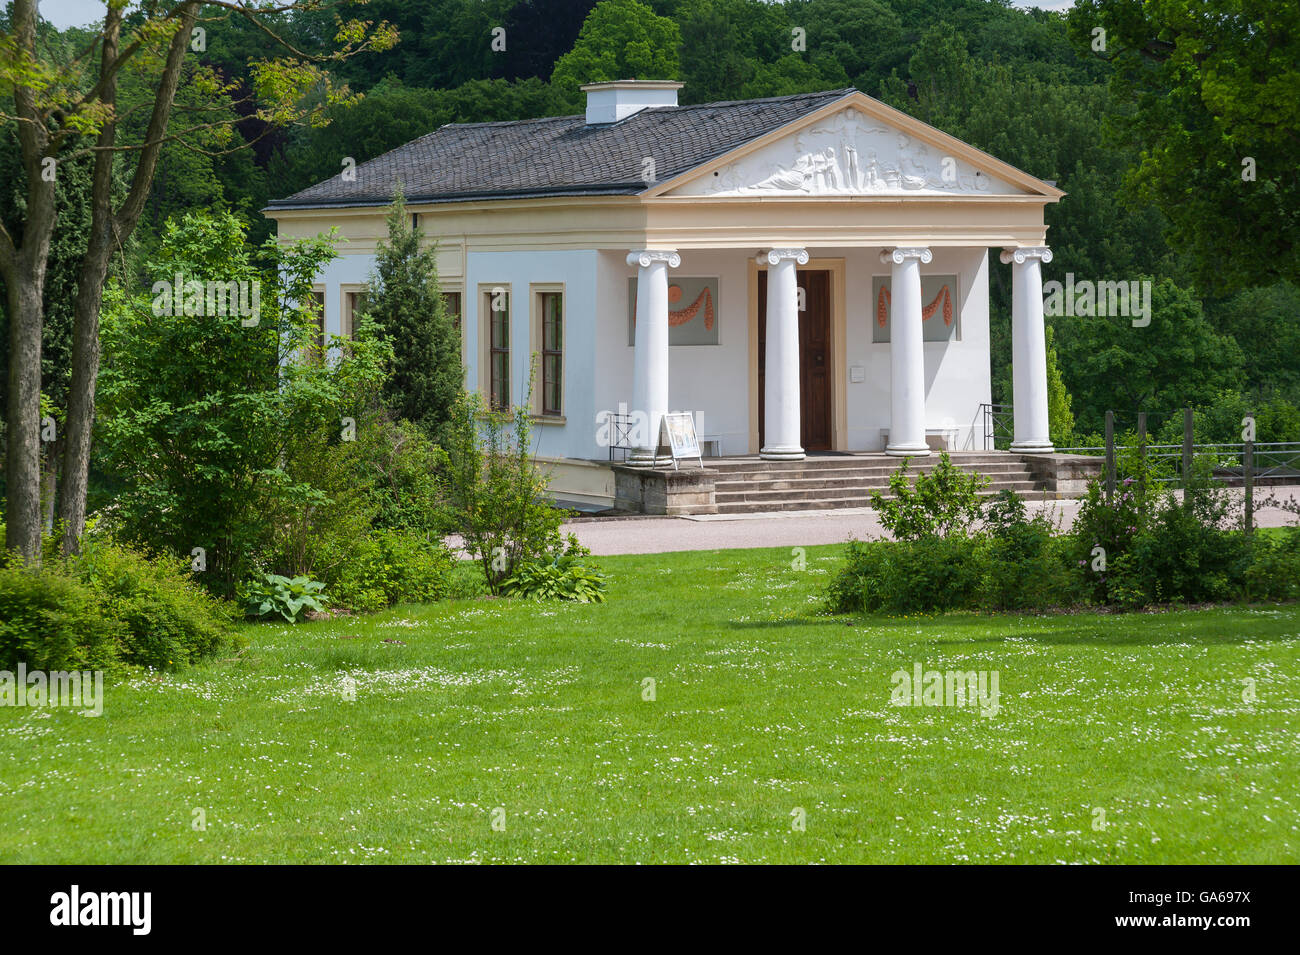 Roman Villa, Park an der Ilm, also named Park on the Ilm, Ilmpark, Weimar, Thuringia, Germany Stock Photo